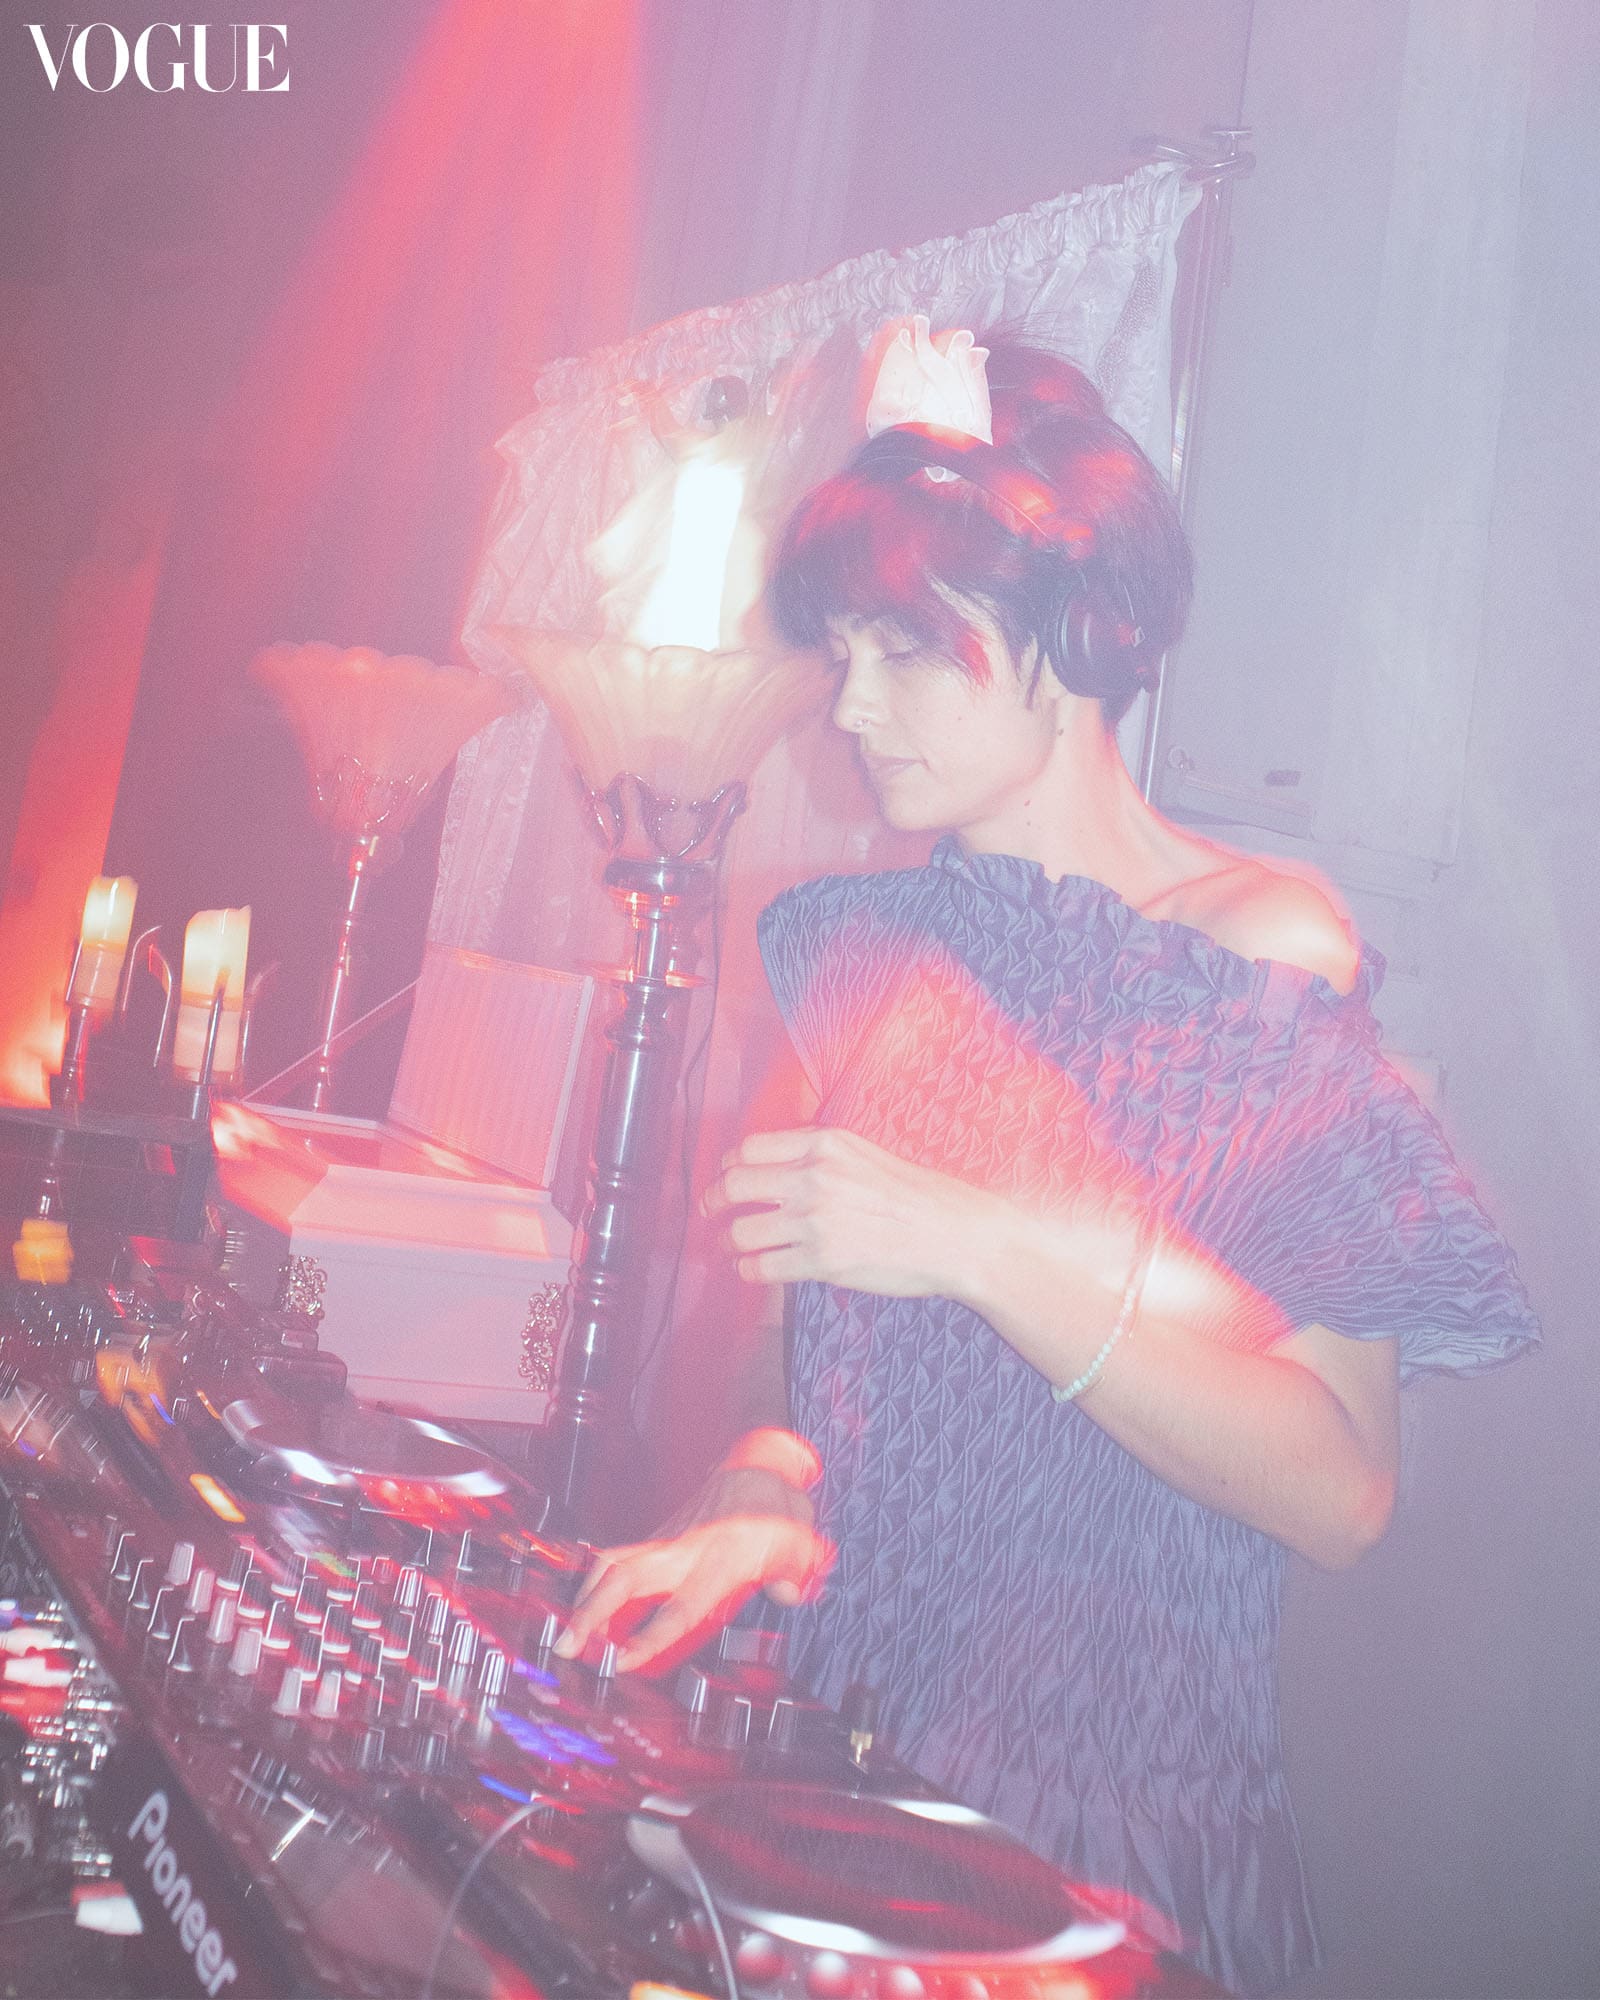 DJ Badkiss playing music at Apotheka’s Church Halloween event.